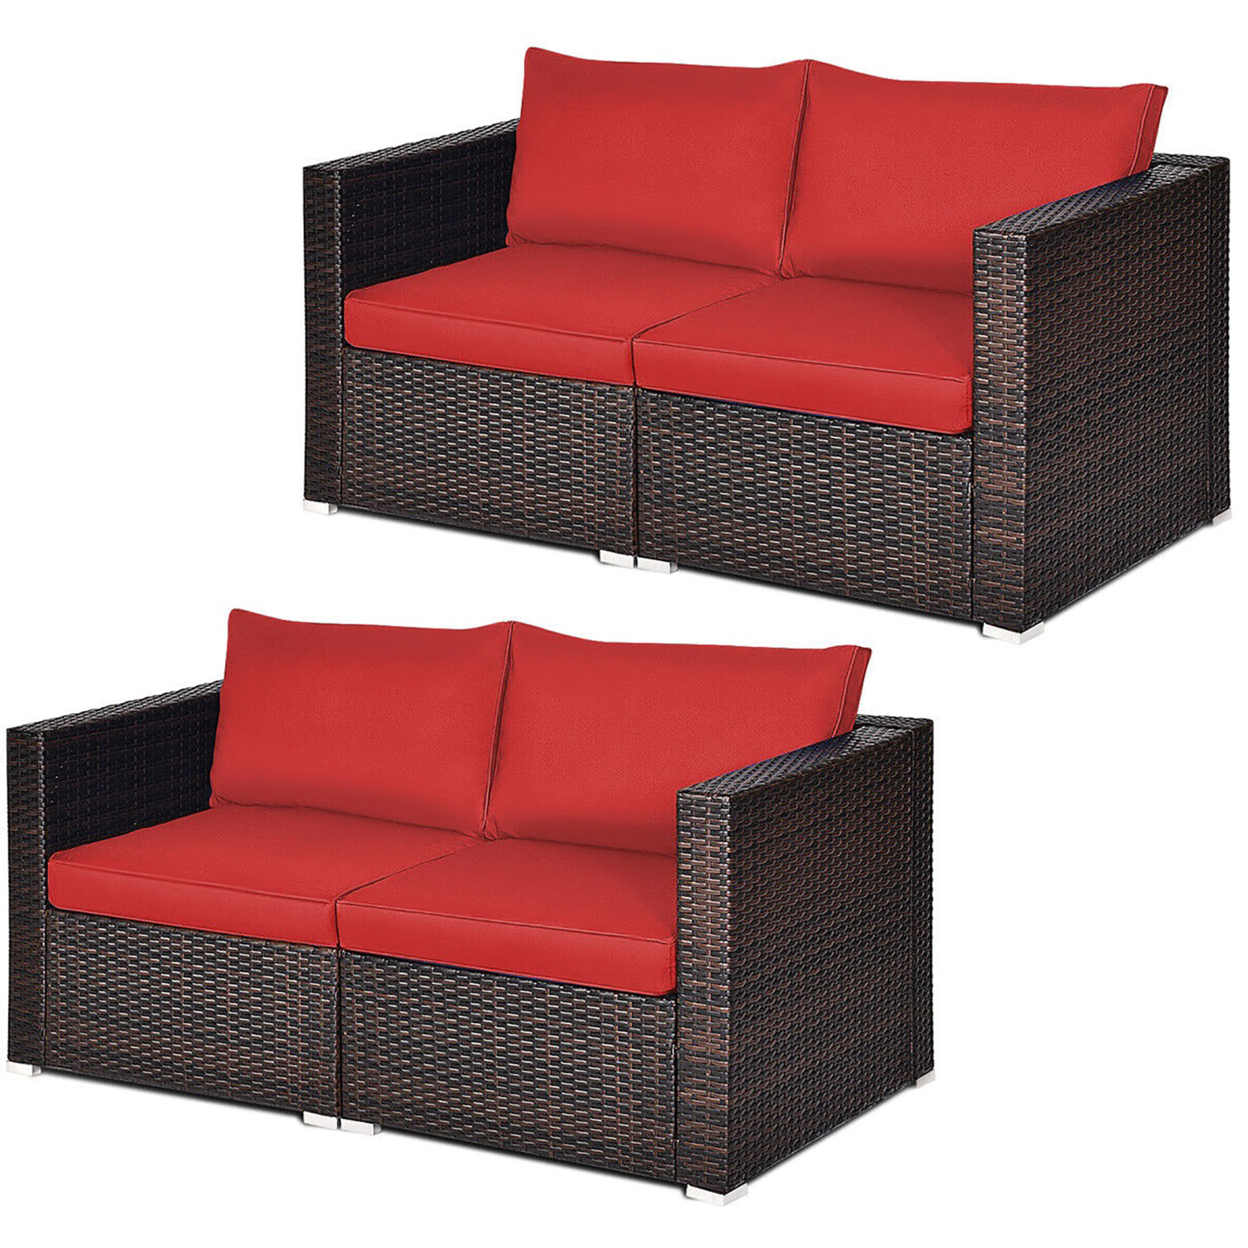 4PCS Rattan Corner Sofa Set Patio Outdoor Furniture Set W/ Red Cushions